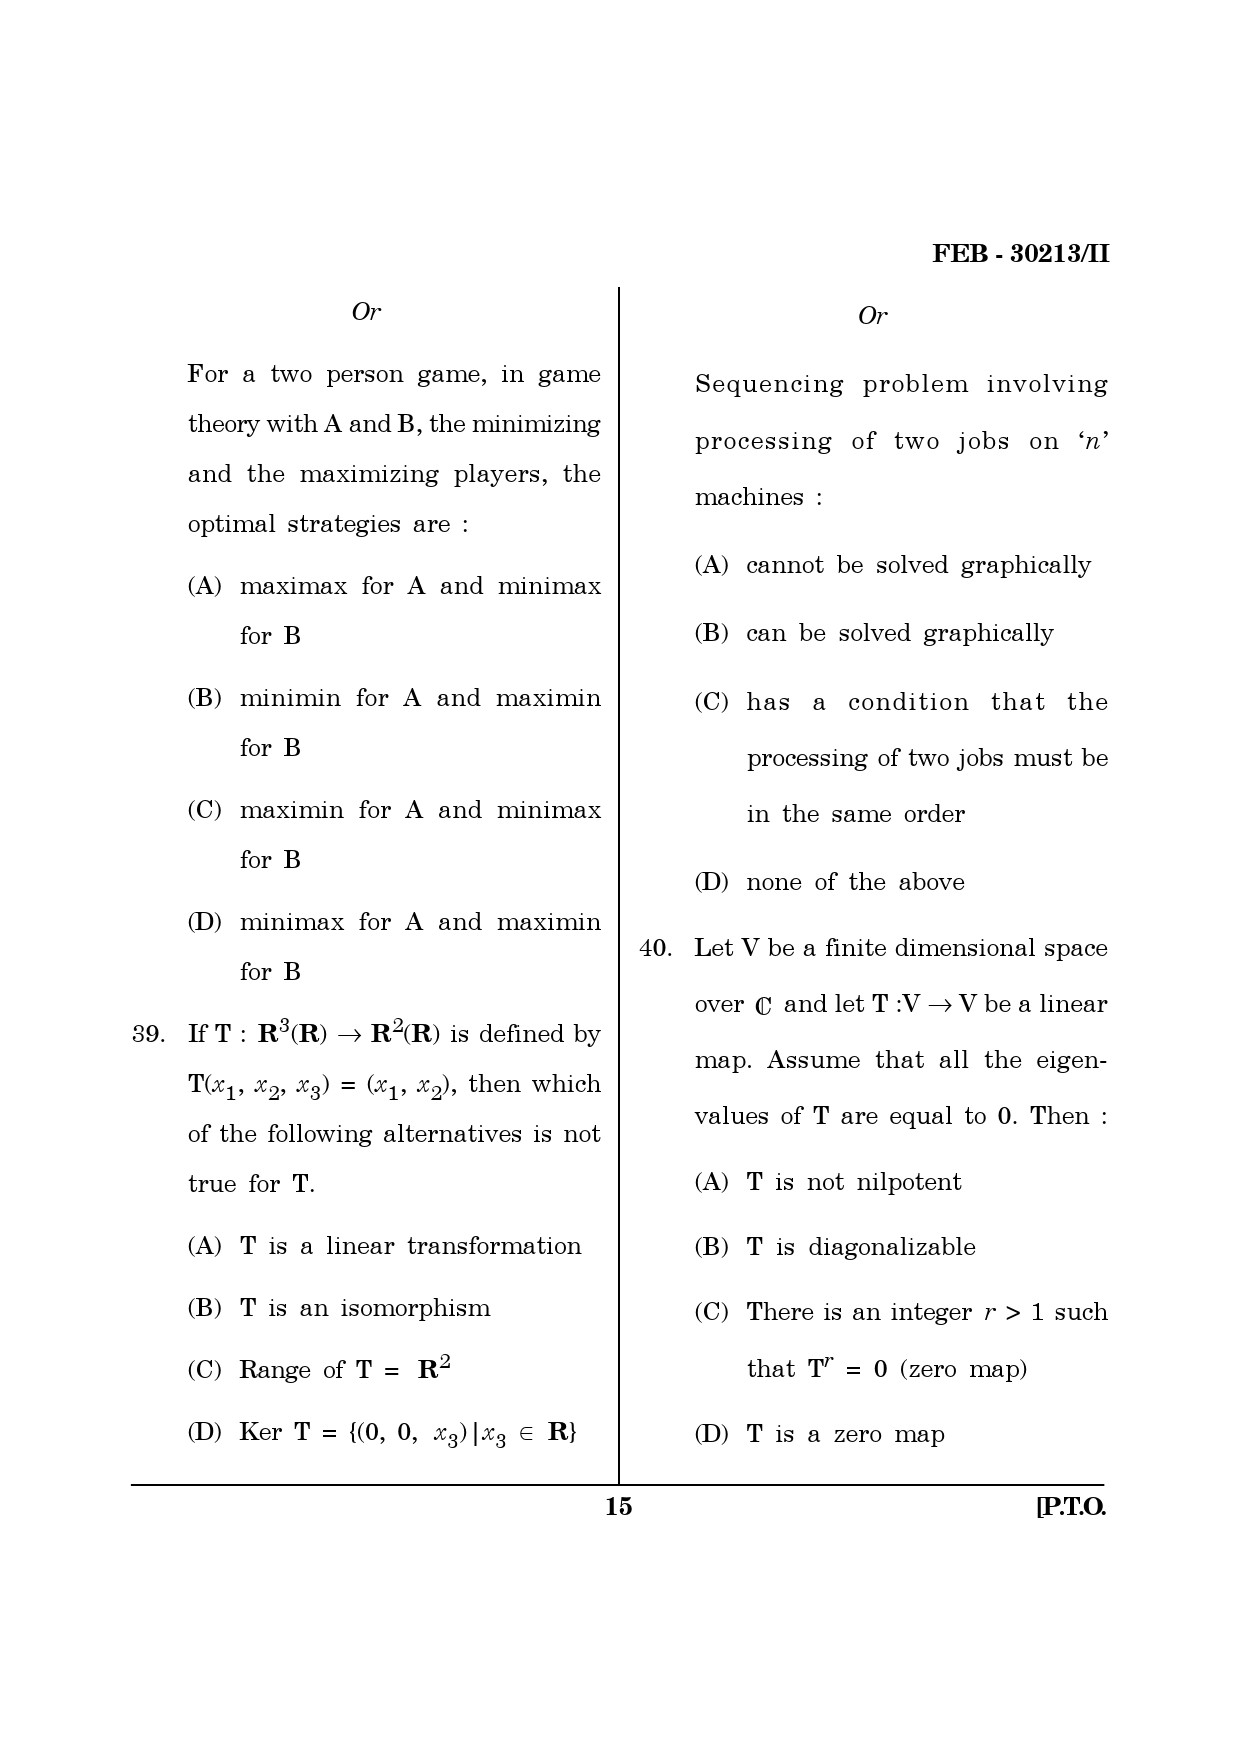 Maharashtra SET Mathematical Sciences Question Paper II February 2013 15